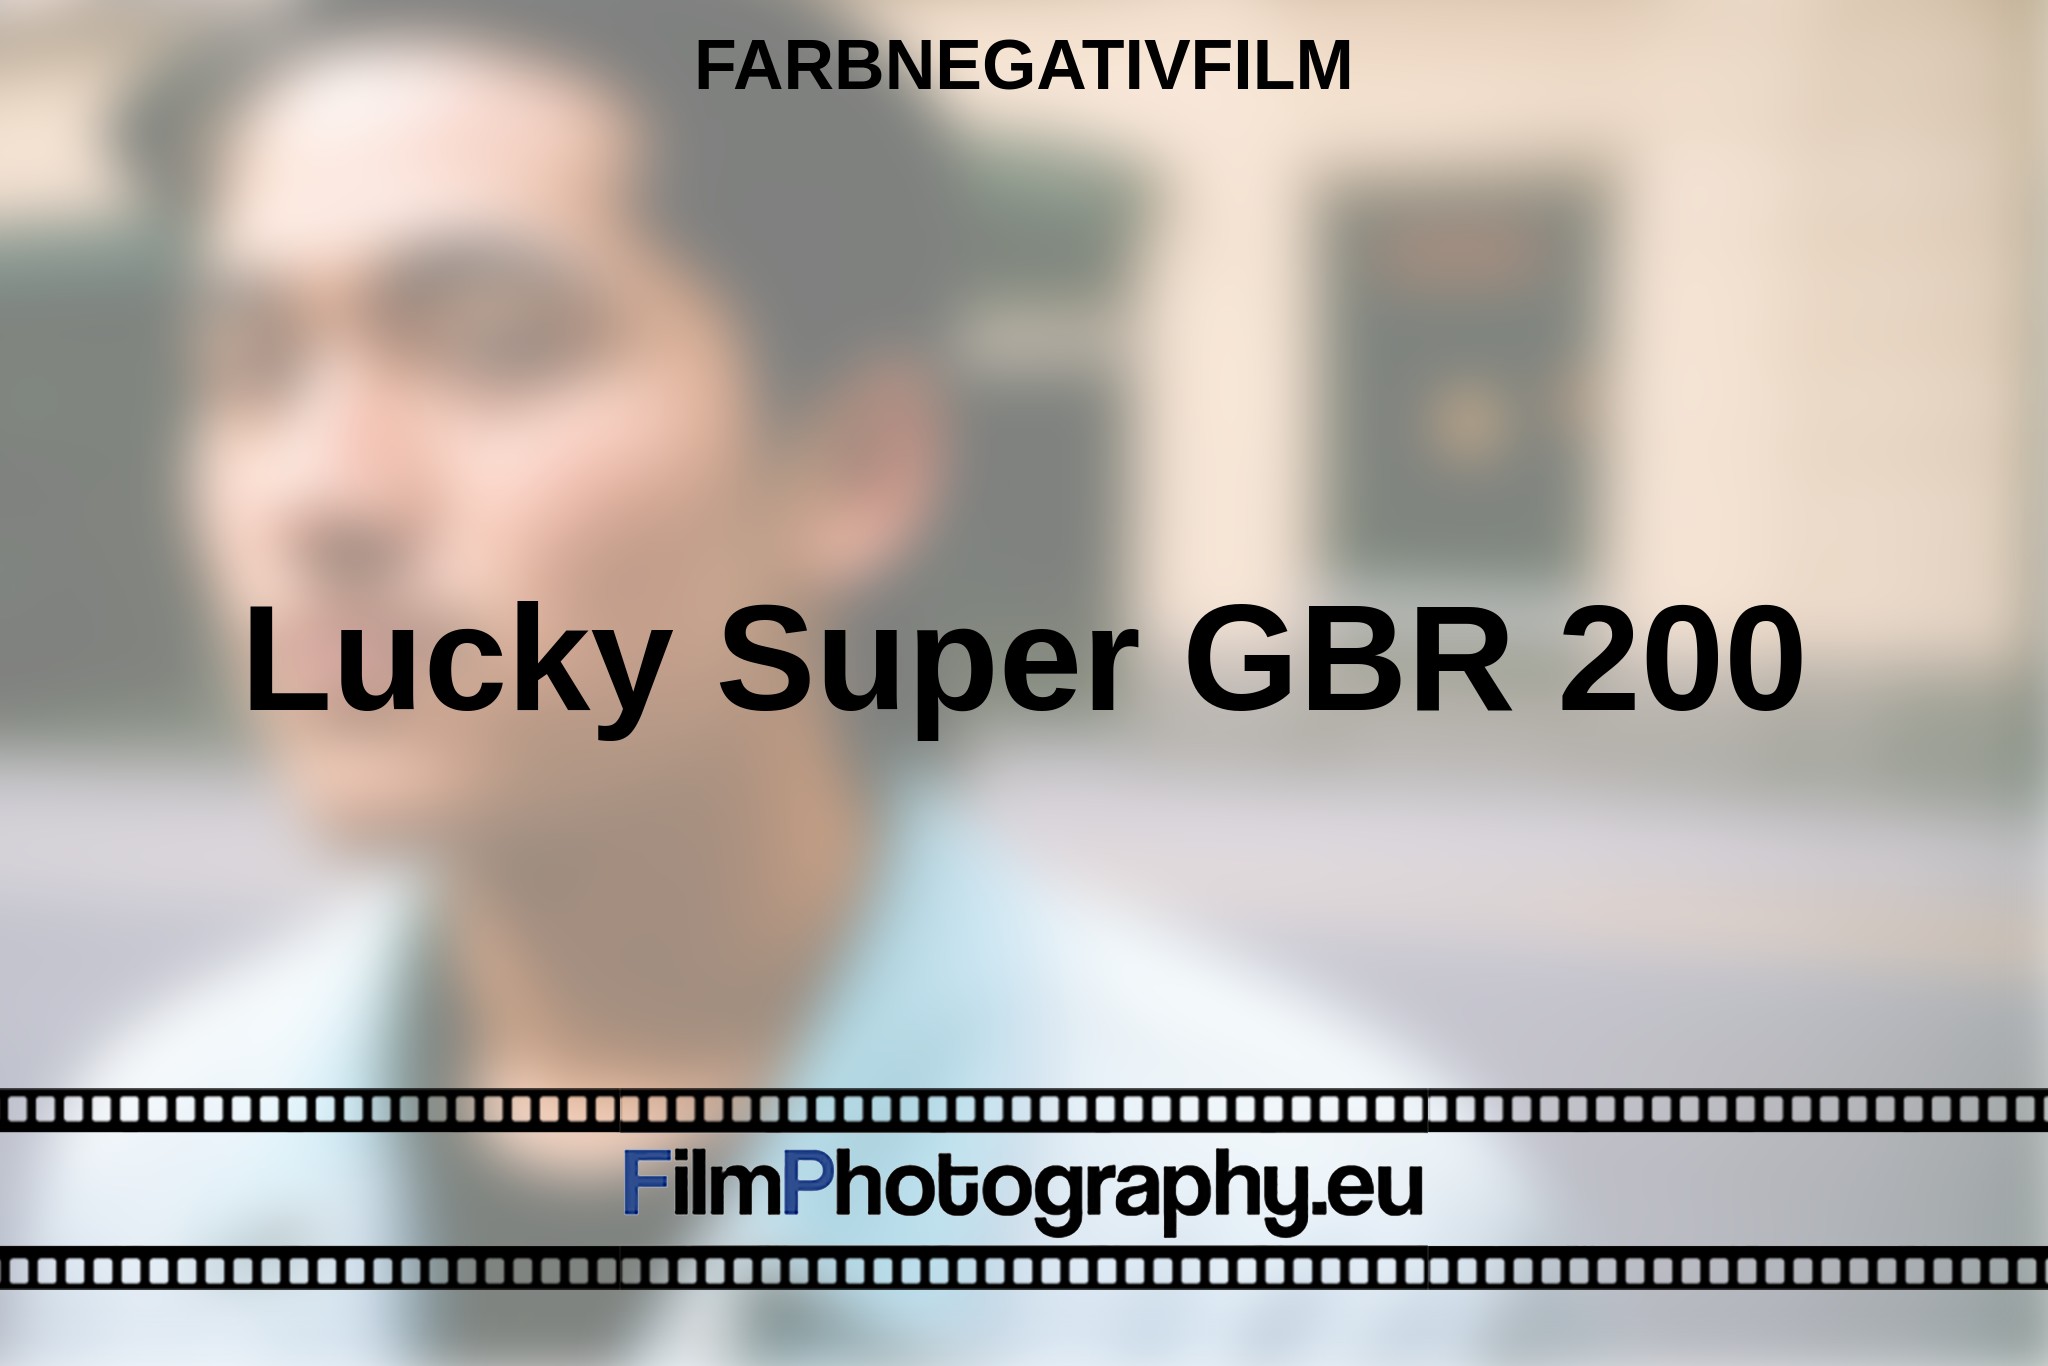 lucky-super-gbr-200-farbnegativfilm-bnv.jpg